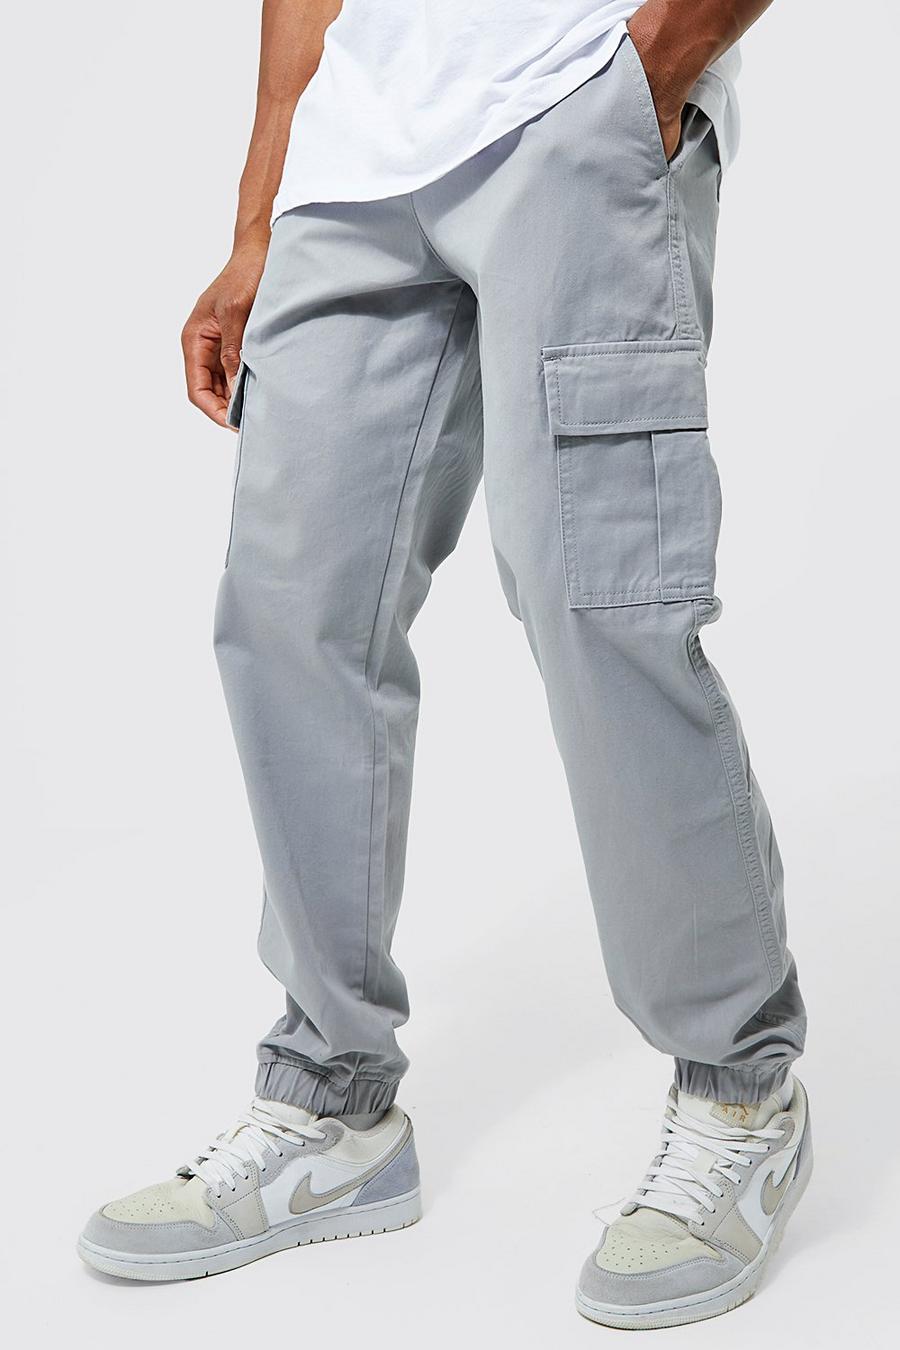 Grey מכנסי דגמ'ח טוויל בגזרה צרה